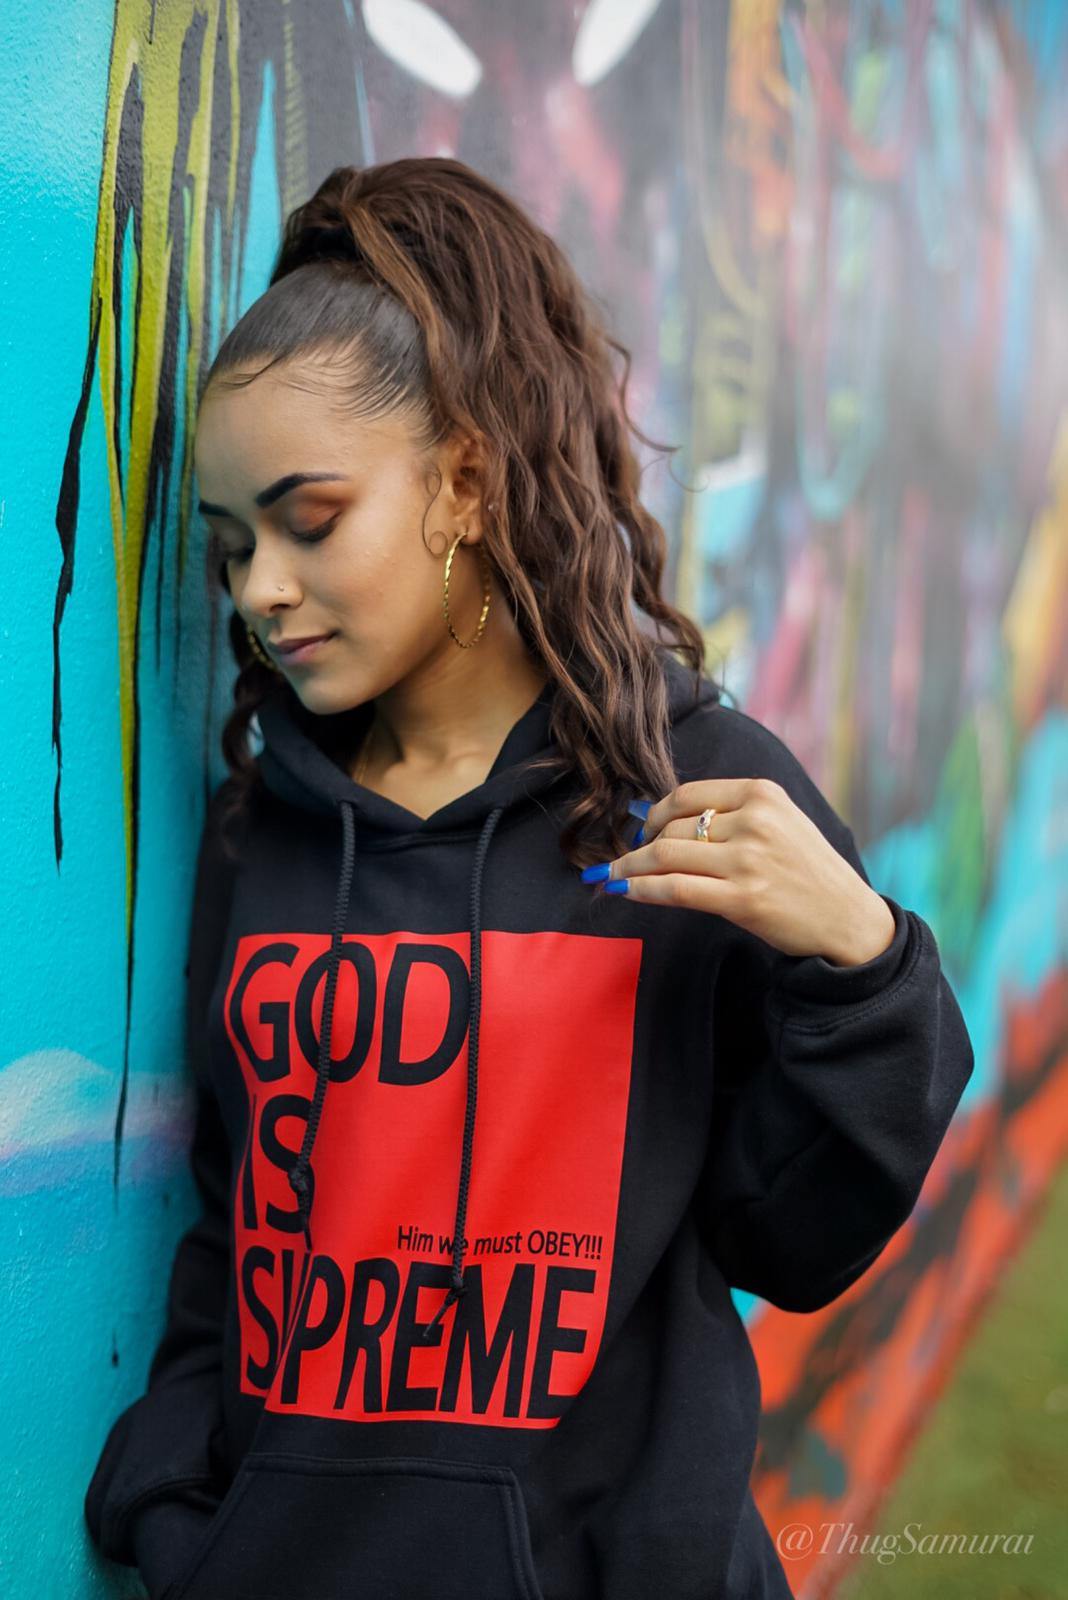 God is Supreme Red Box/ Black Hoodie - God Is Supreme 